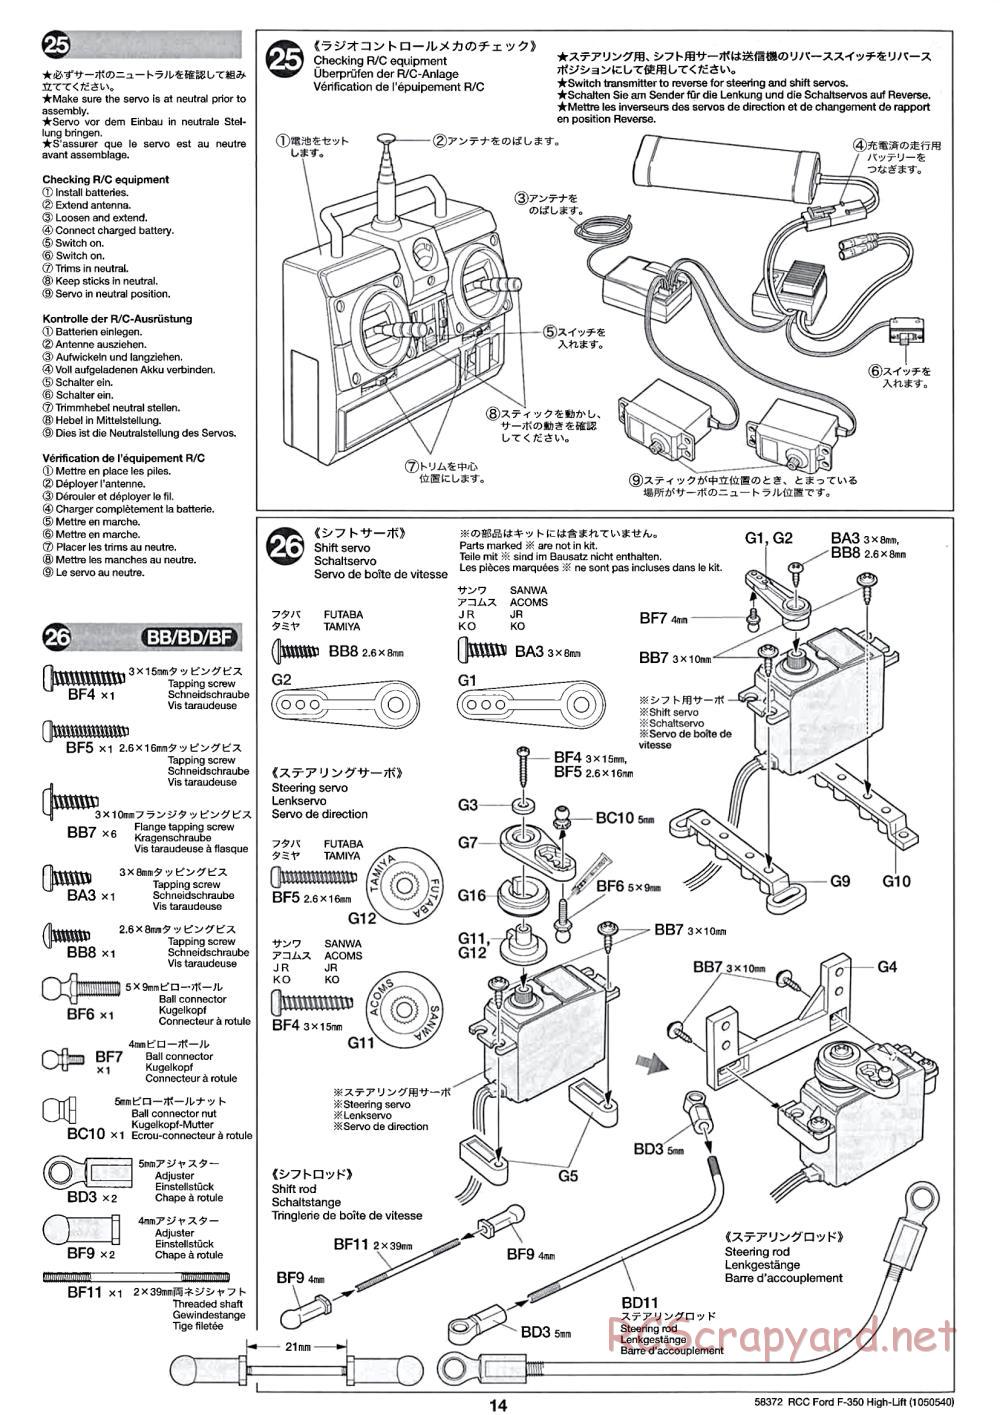 Tamiya - Ford F350 High-Lift Chassis - Manual - Page 14